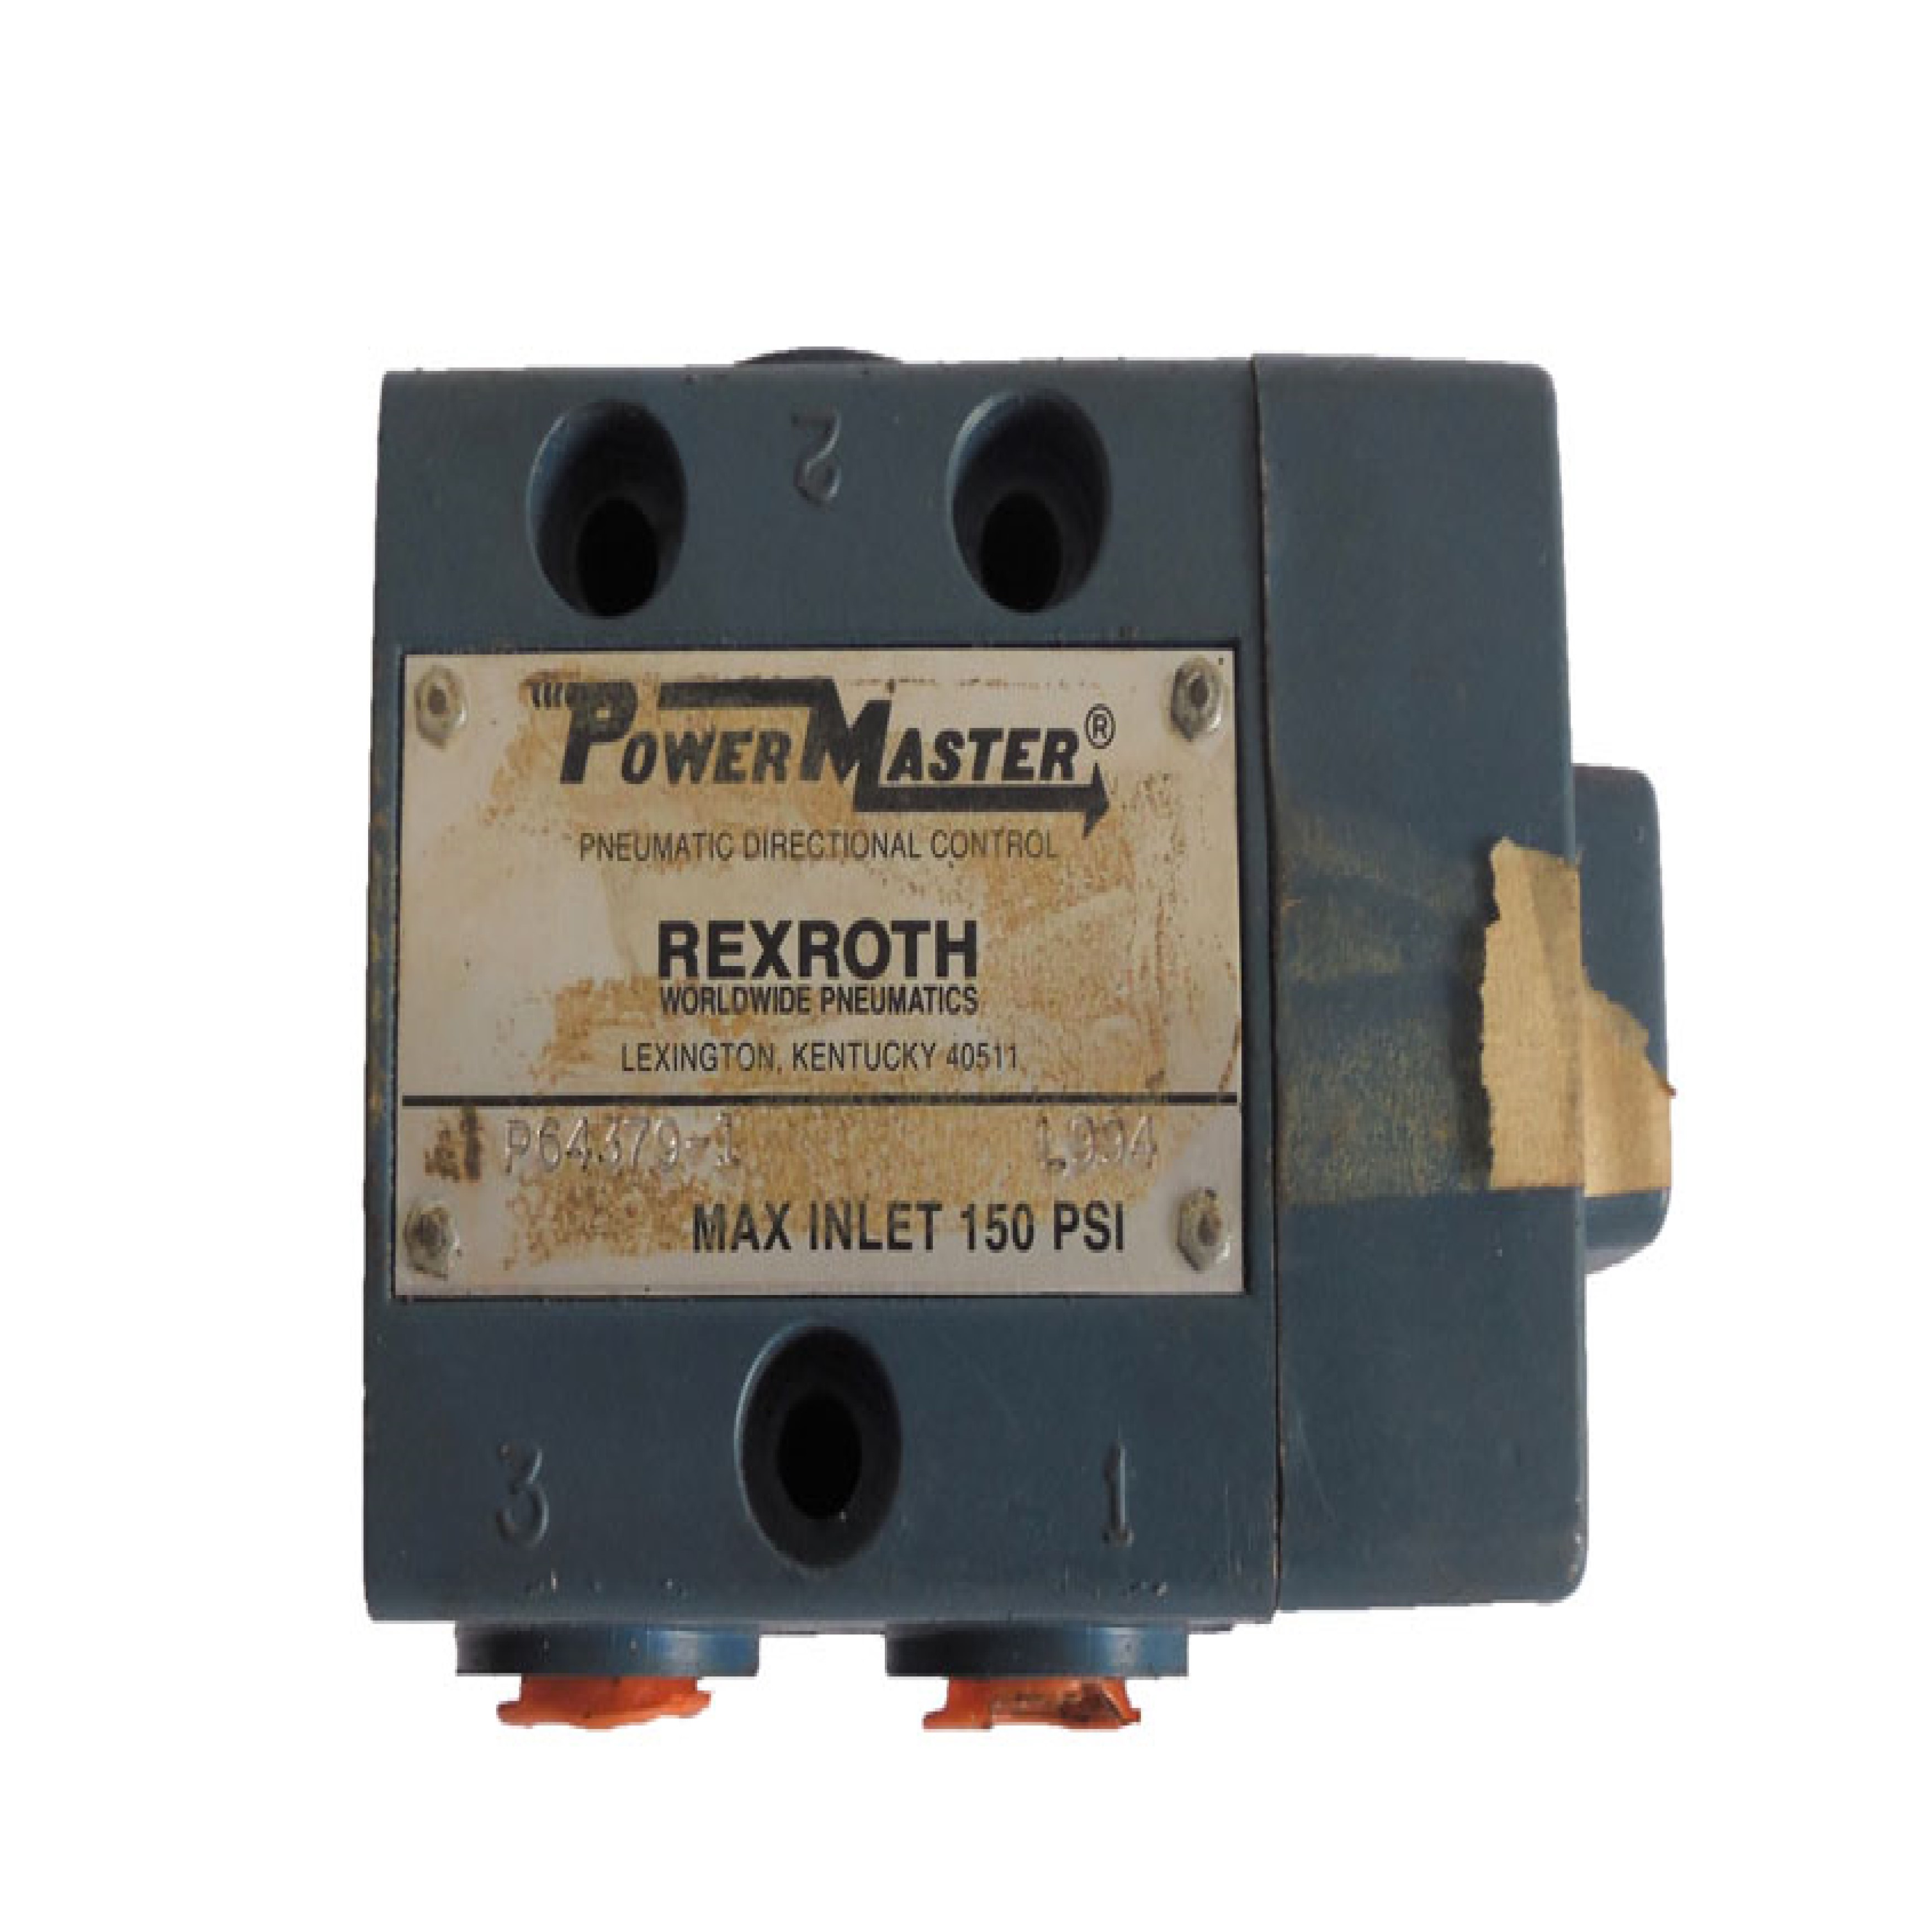 Rexroth  Power Master  P64379